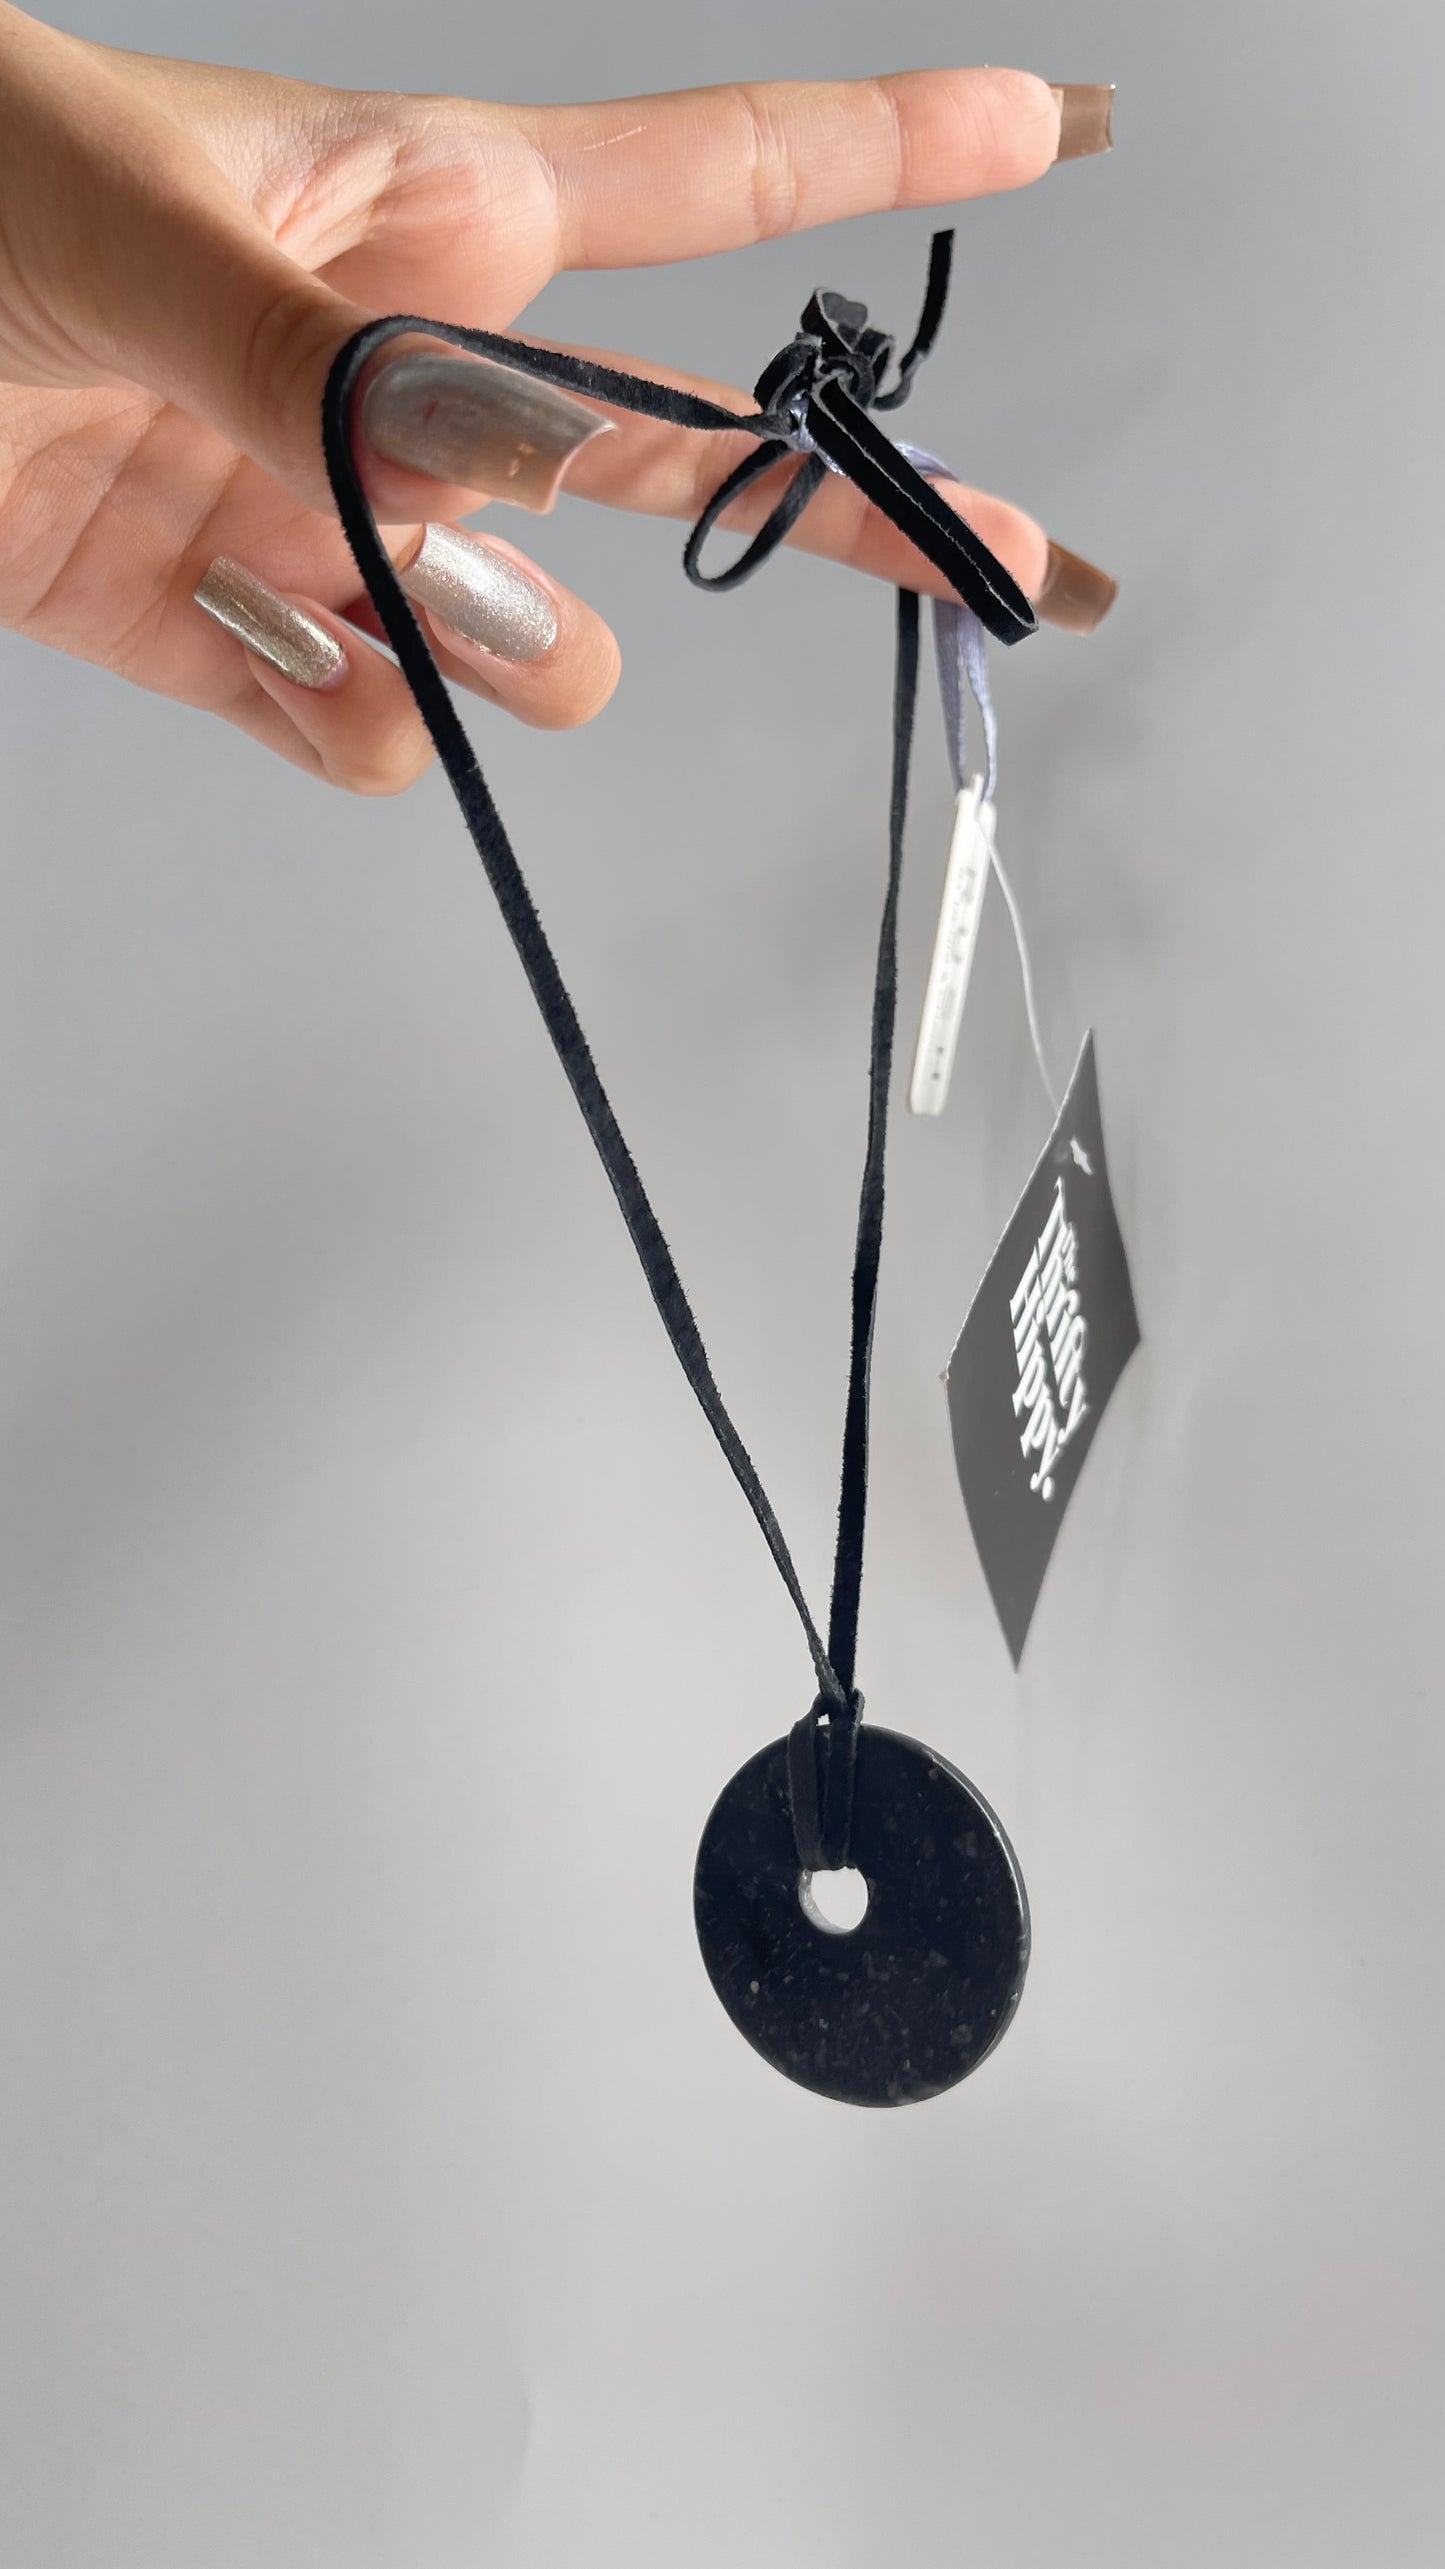 Deadstock Vintage Black Circular Stone Pendant Necklace Adjustable Length